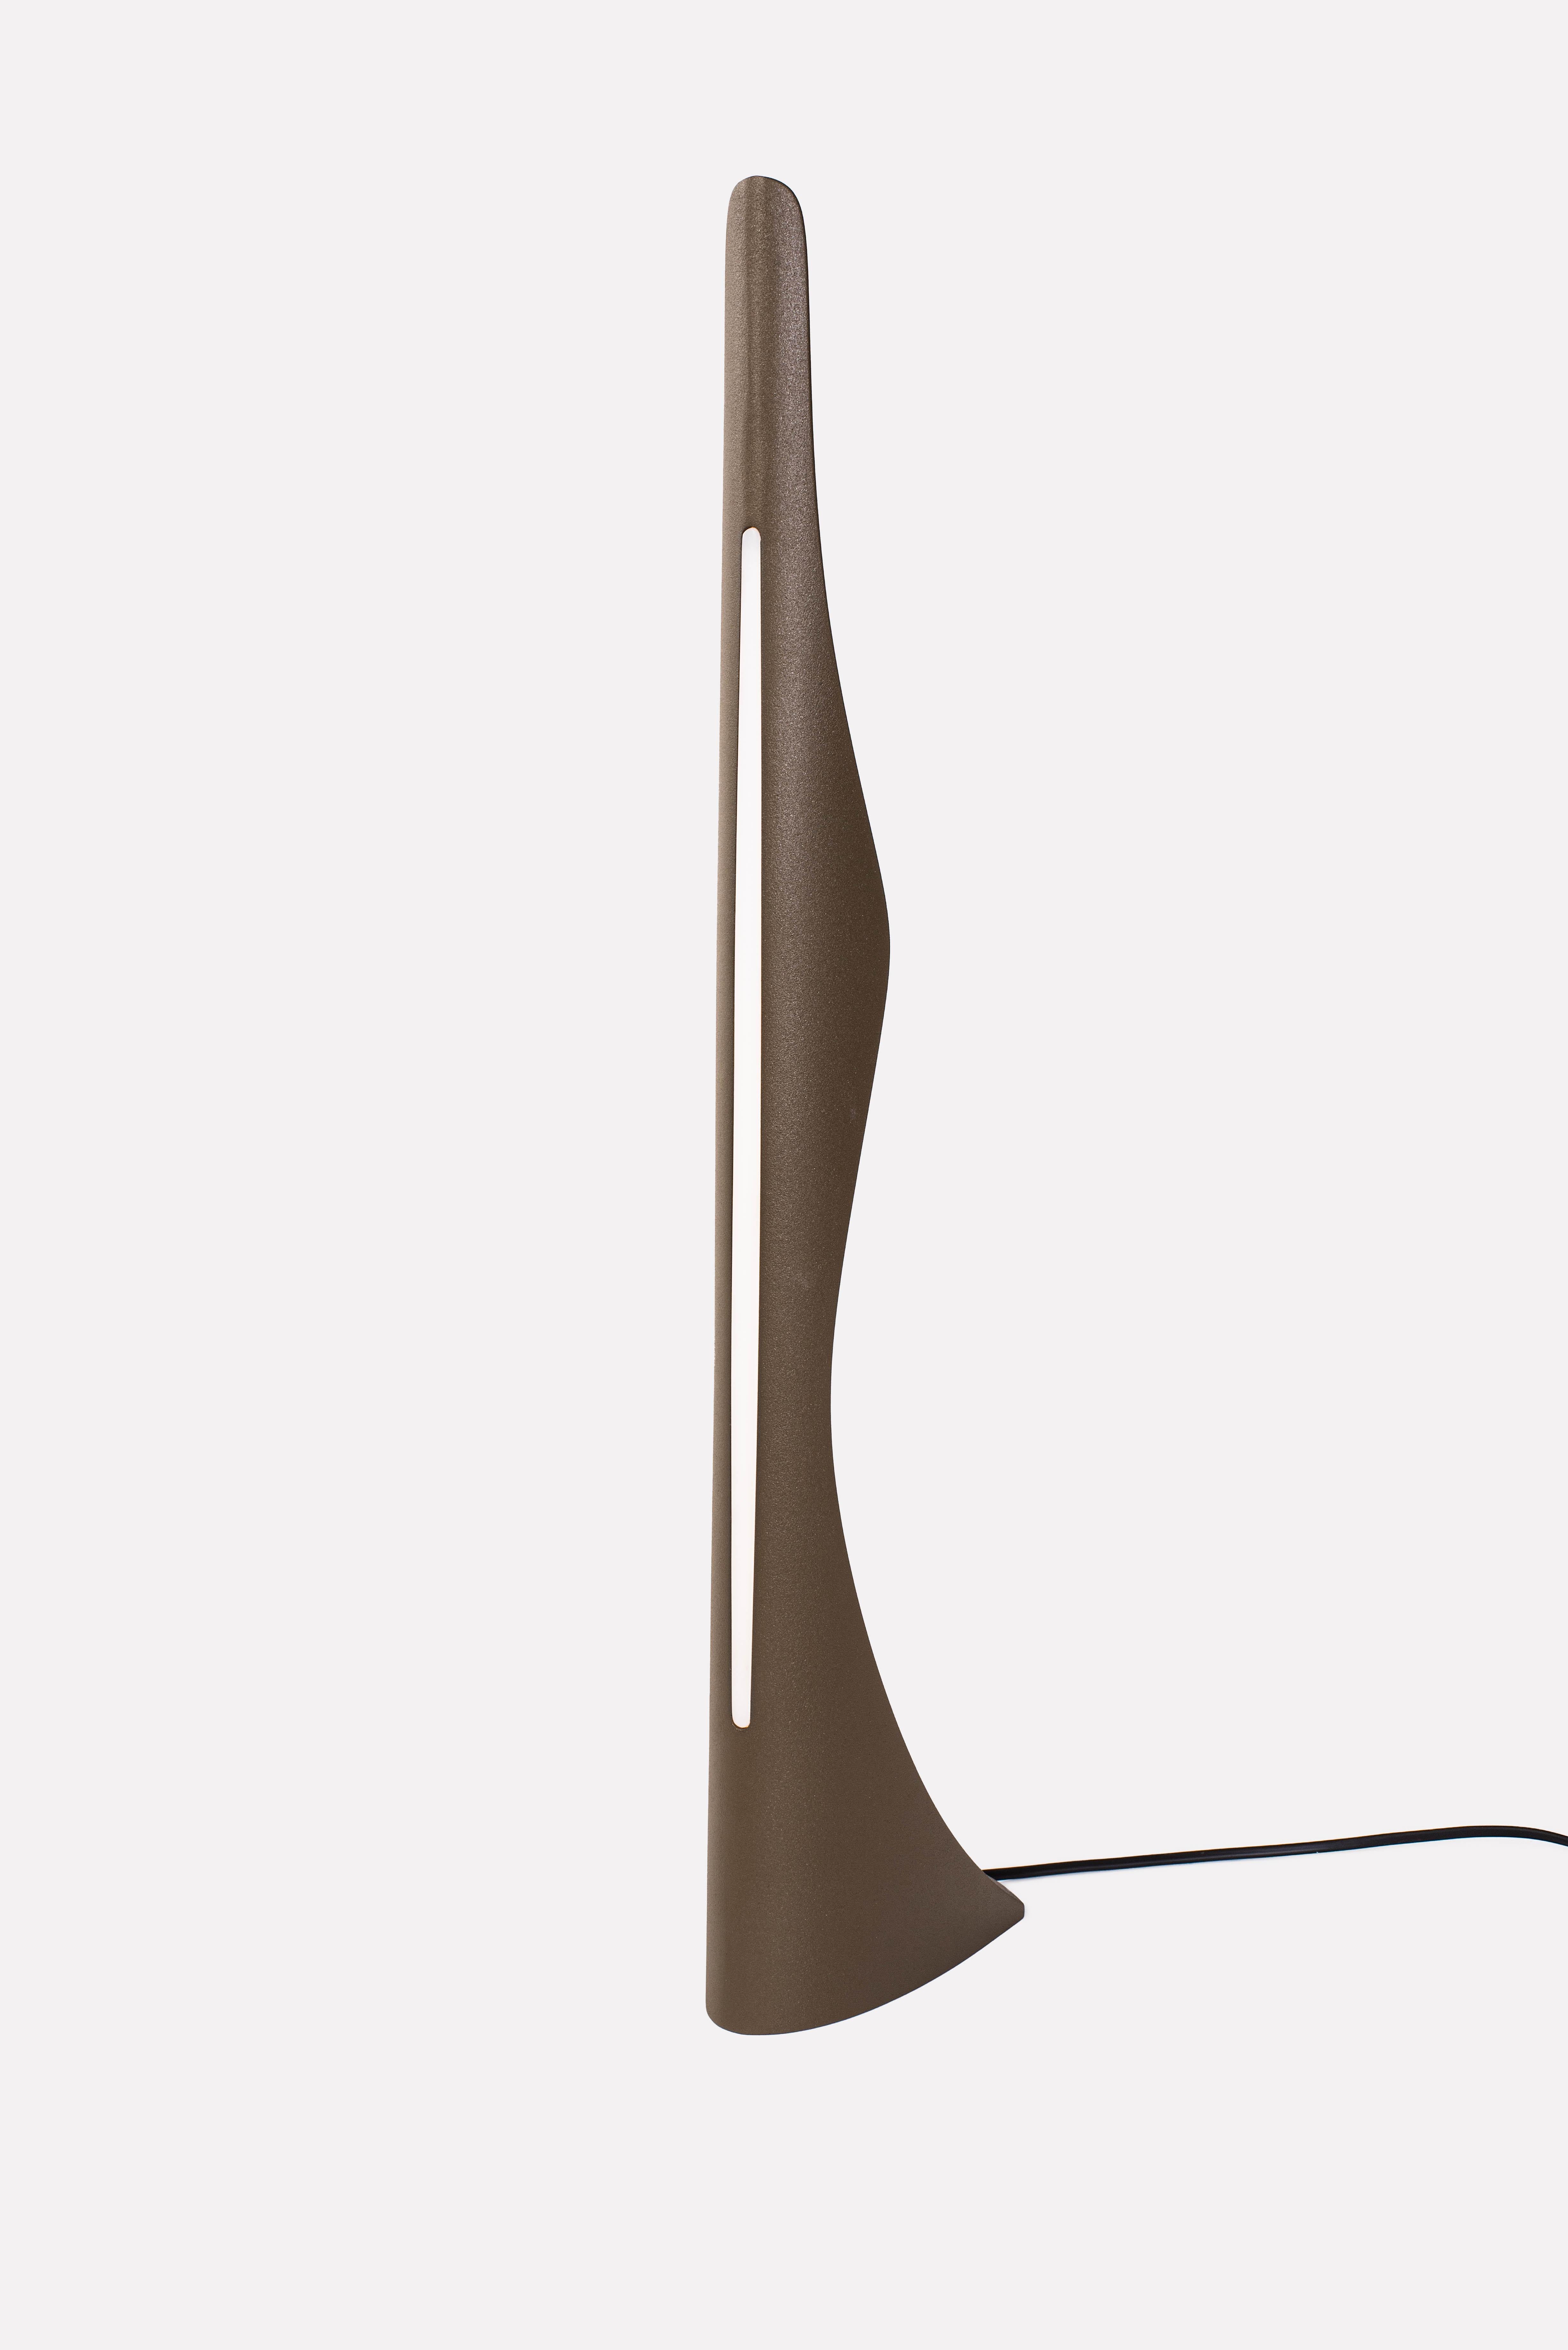 Modern by Cyril Rumpler Handmade Table Light Aluminium Silhouette Copper For Sale 2